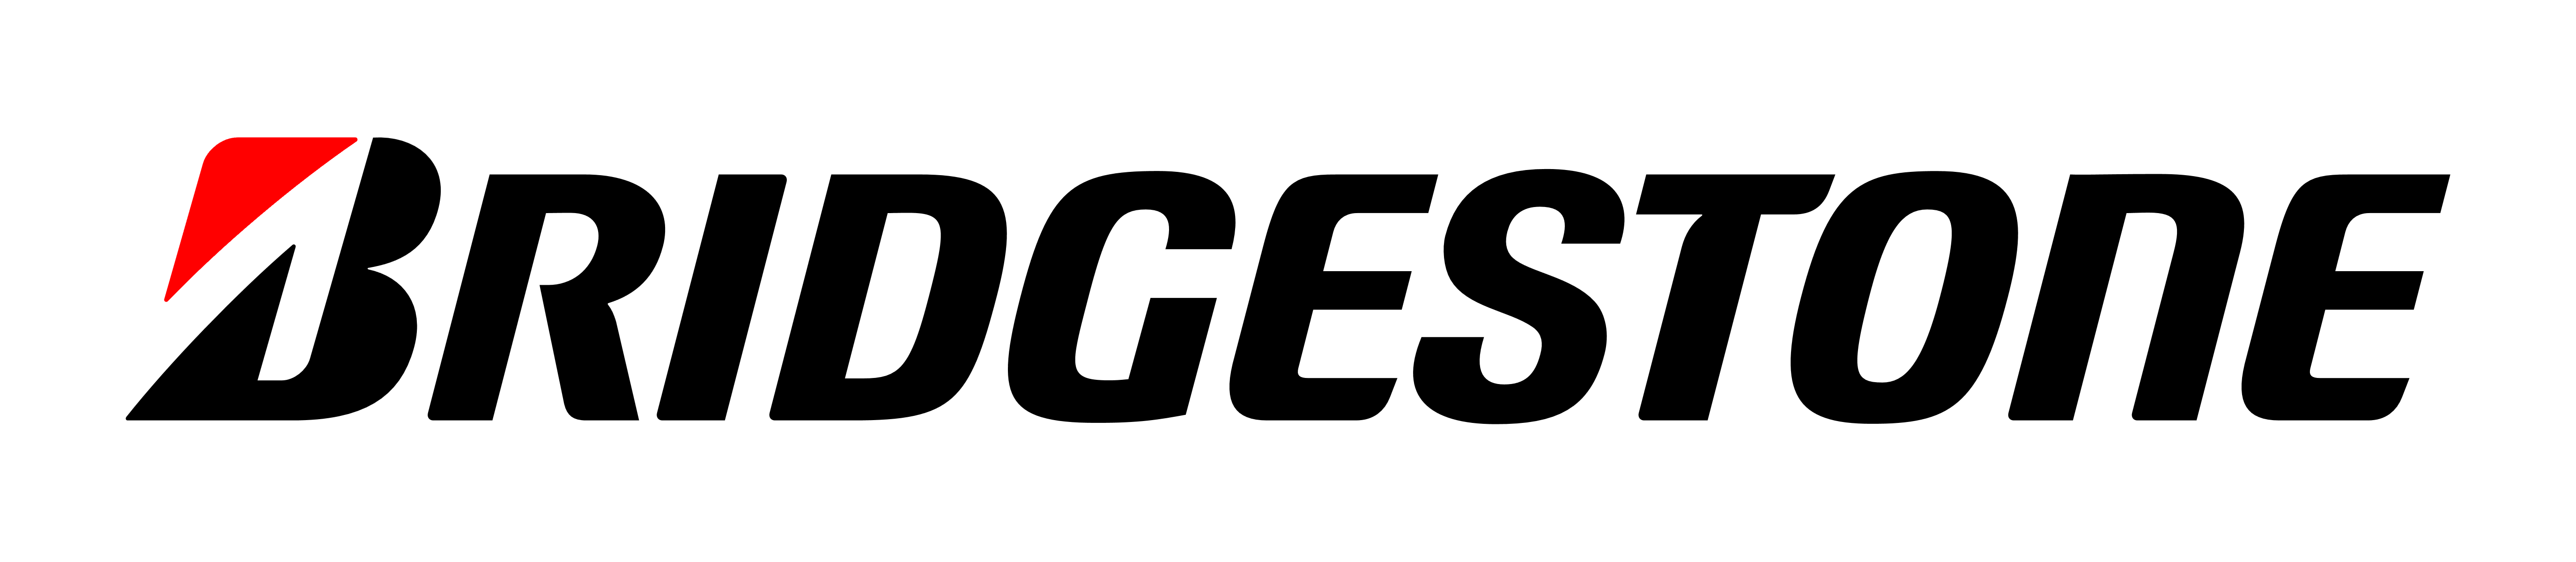 Bridgestone Logo, Png, Meaning - Bridgestone, Transparent background PNG HD thumbnail